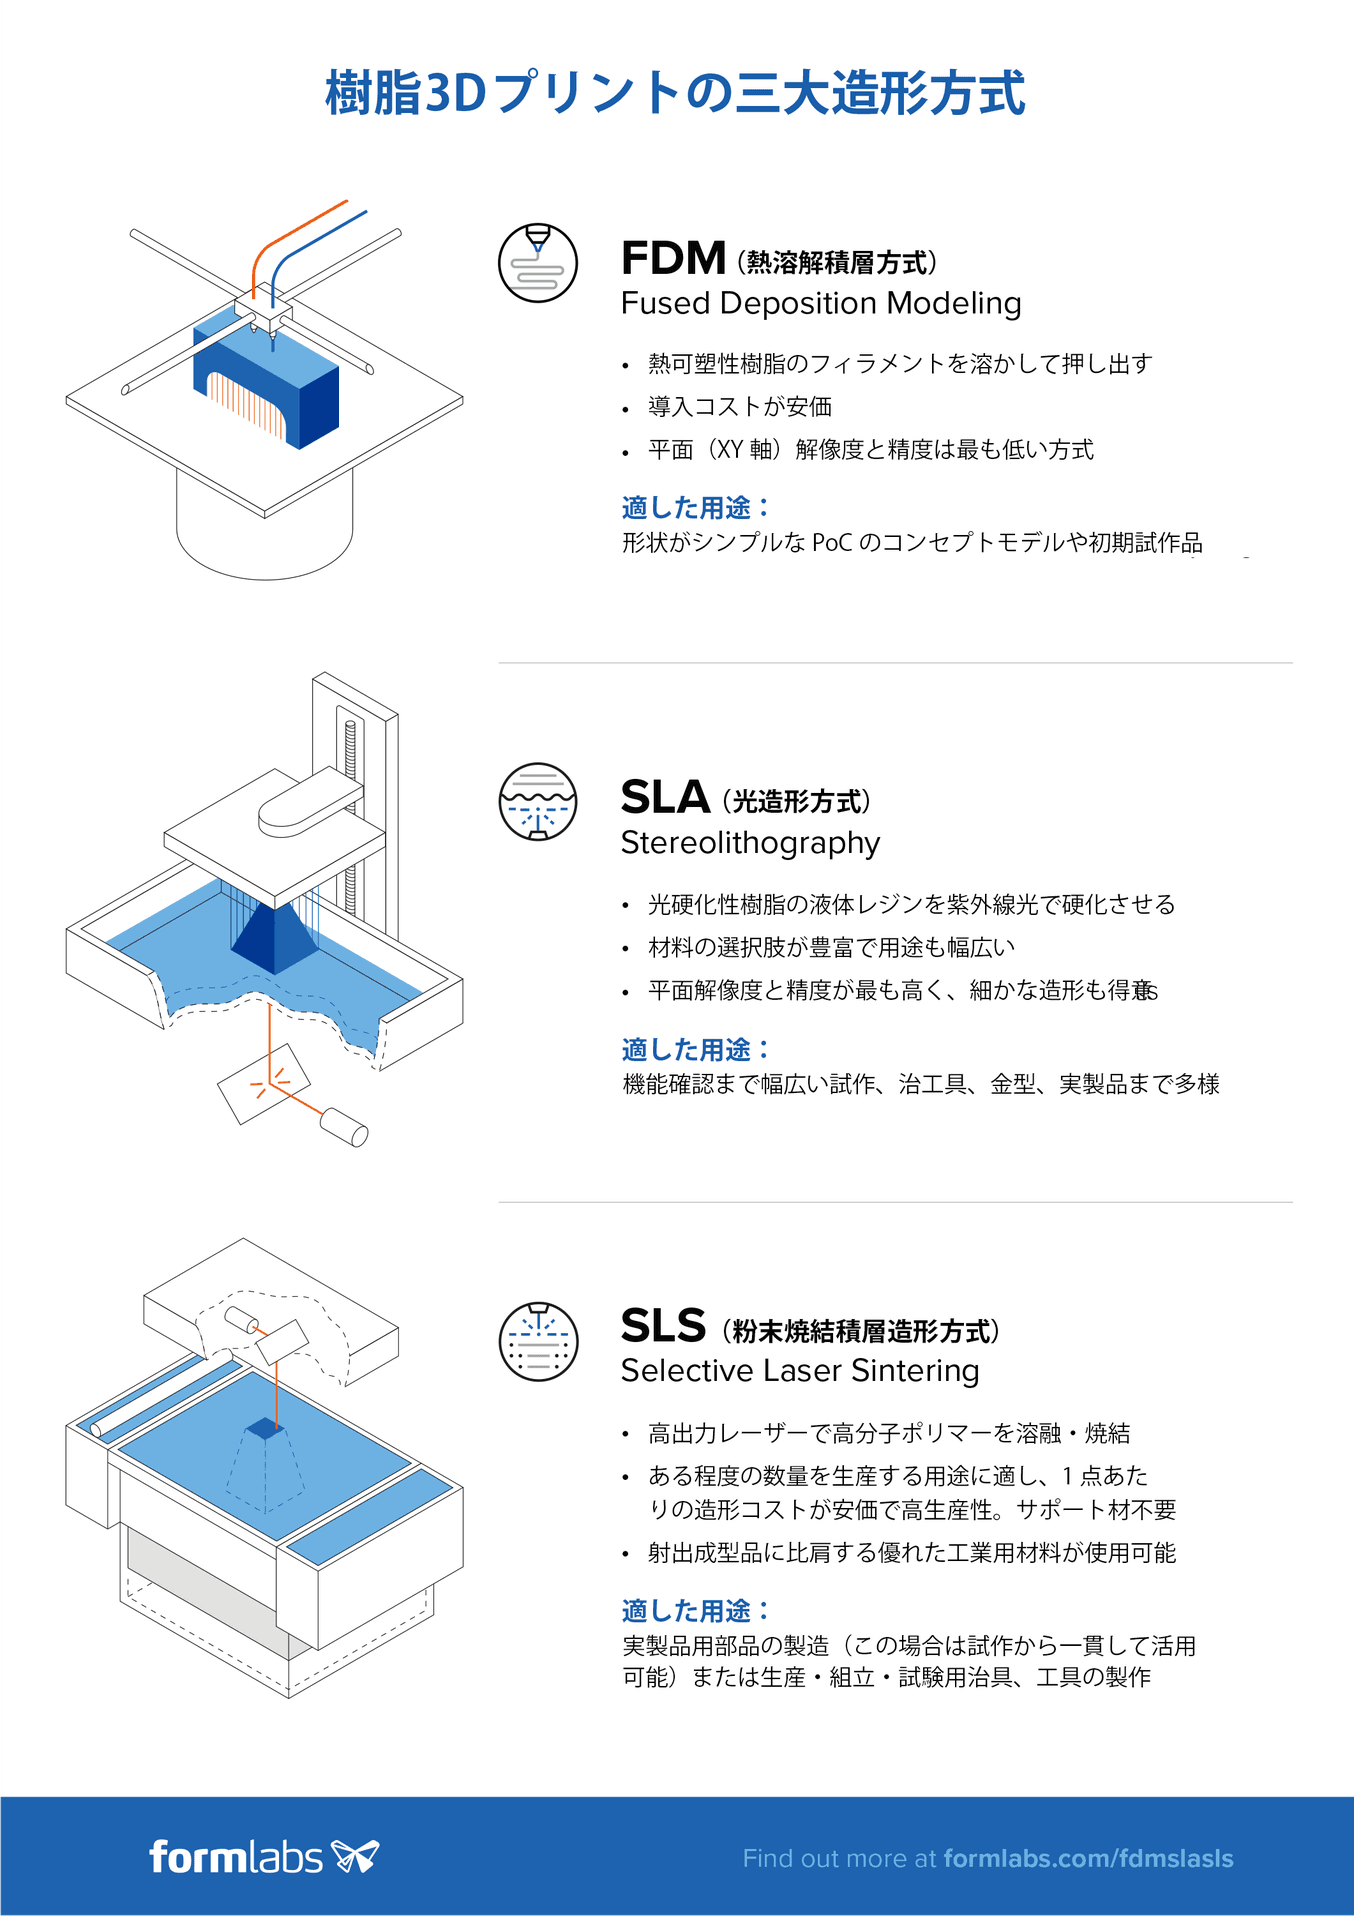 FDM vs SLA vs SLS comparison - 3D printing technologies for plastics - Infographic